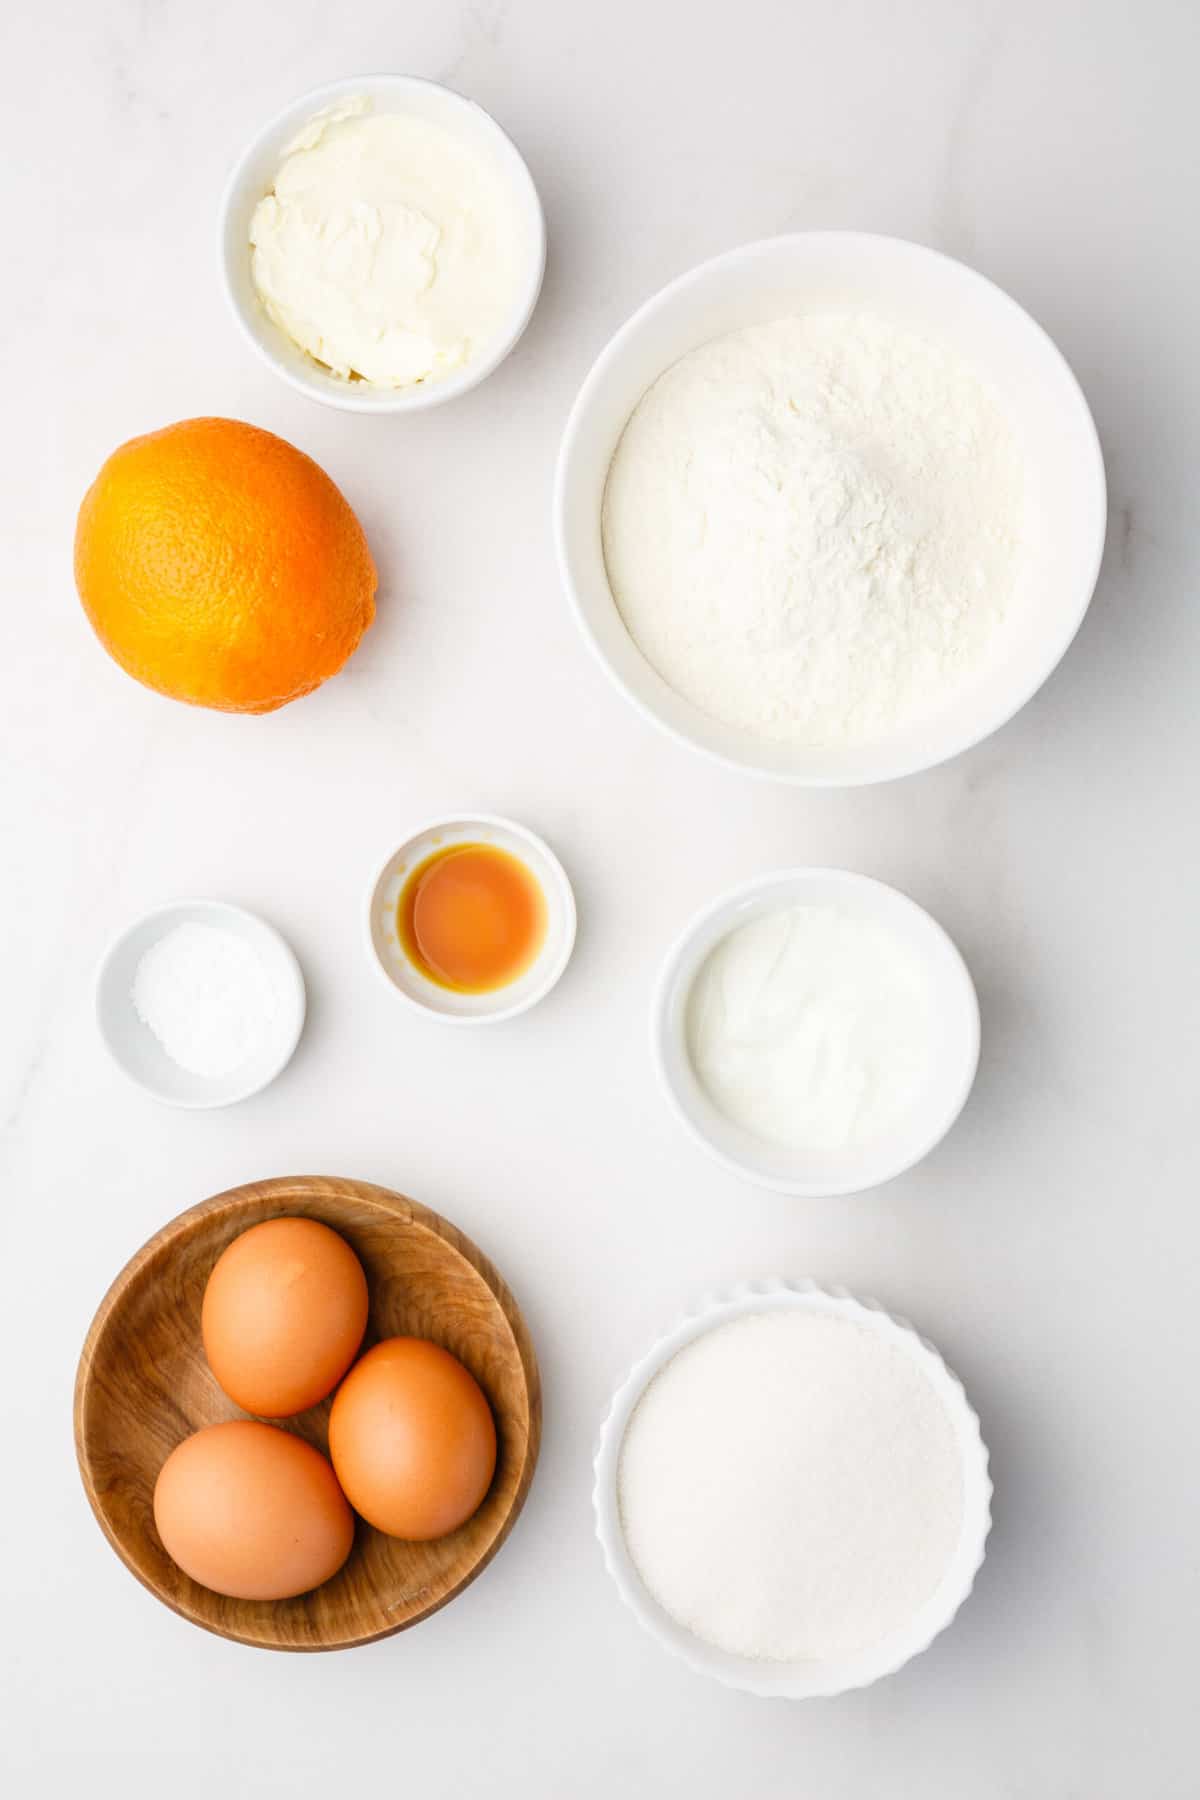 ingredients to make orange cake and orange glaze.